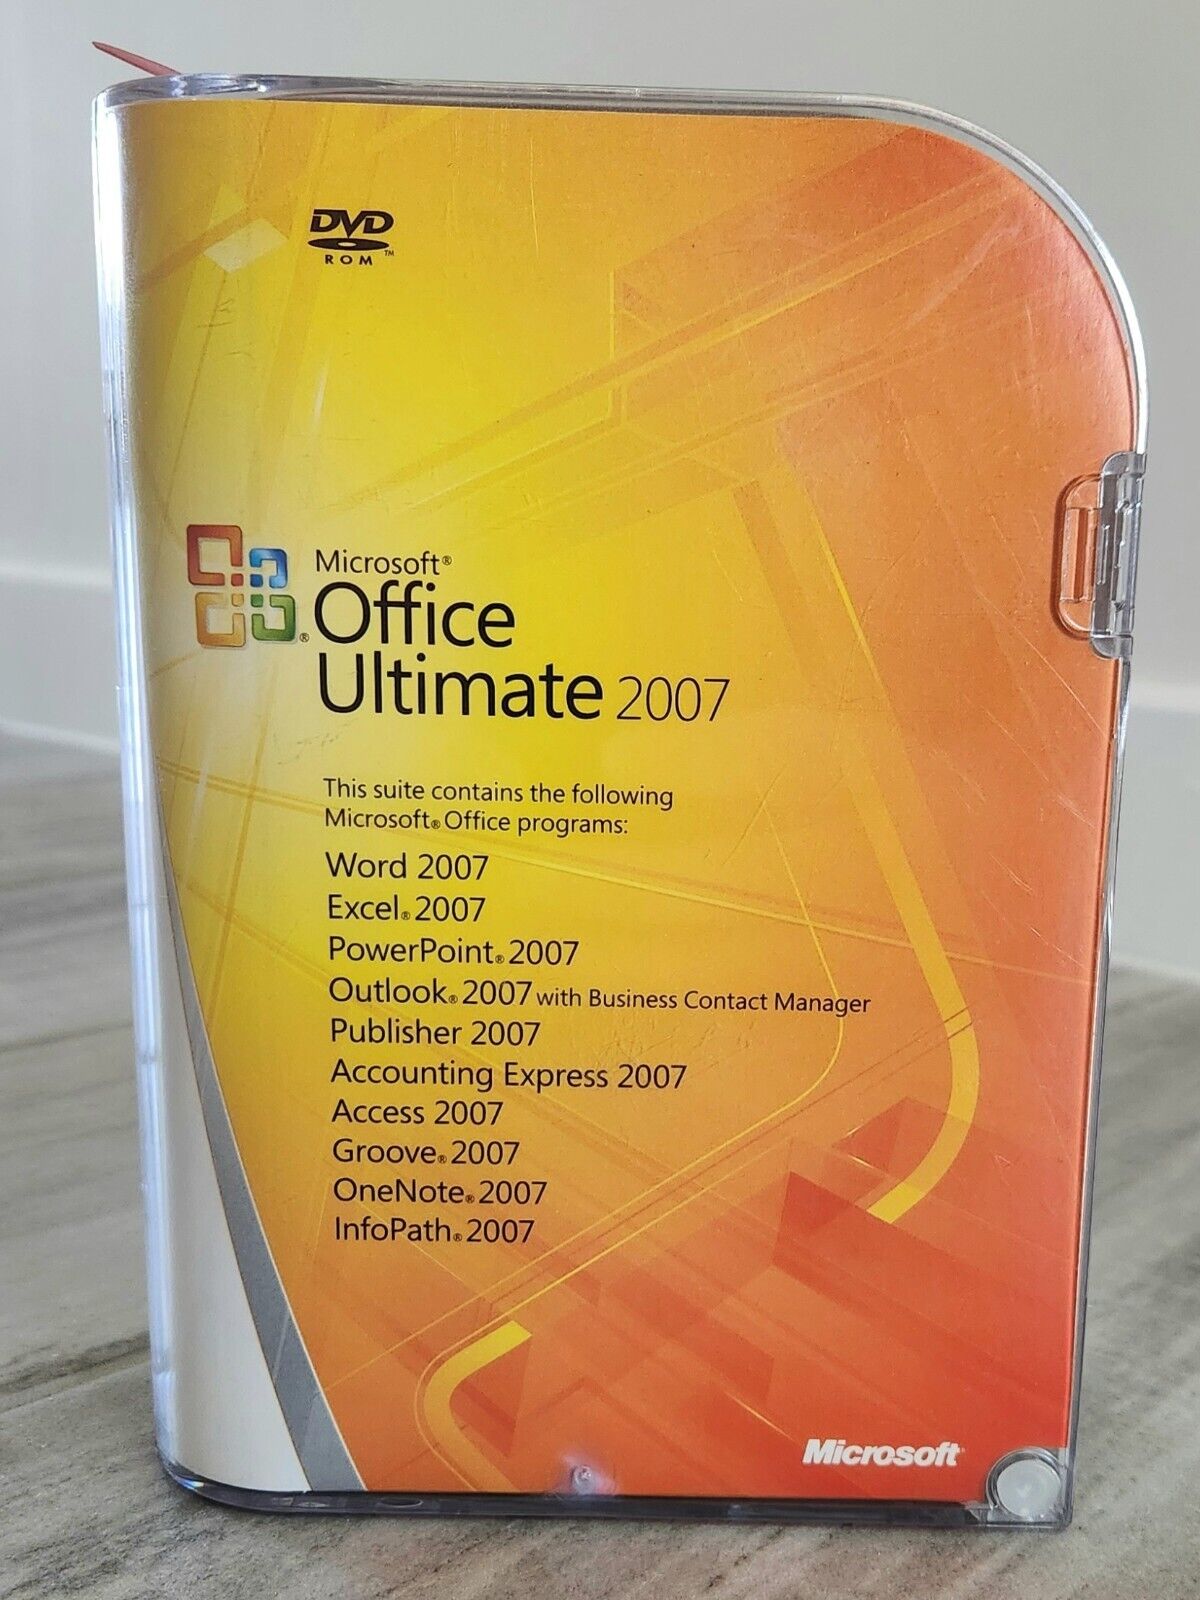 Genuine Microsoft Office Ultimate 2007 2 Disc Set w/ CD Key